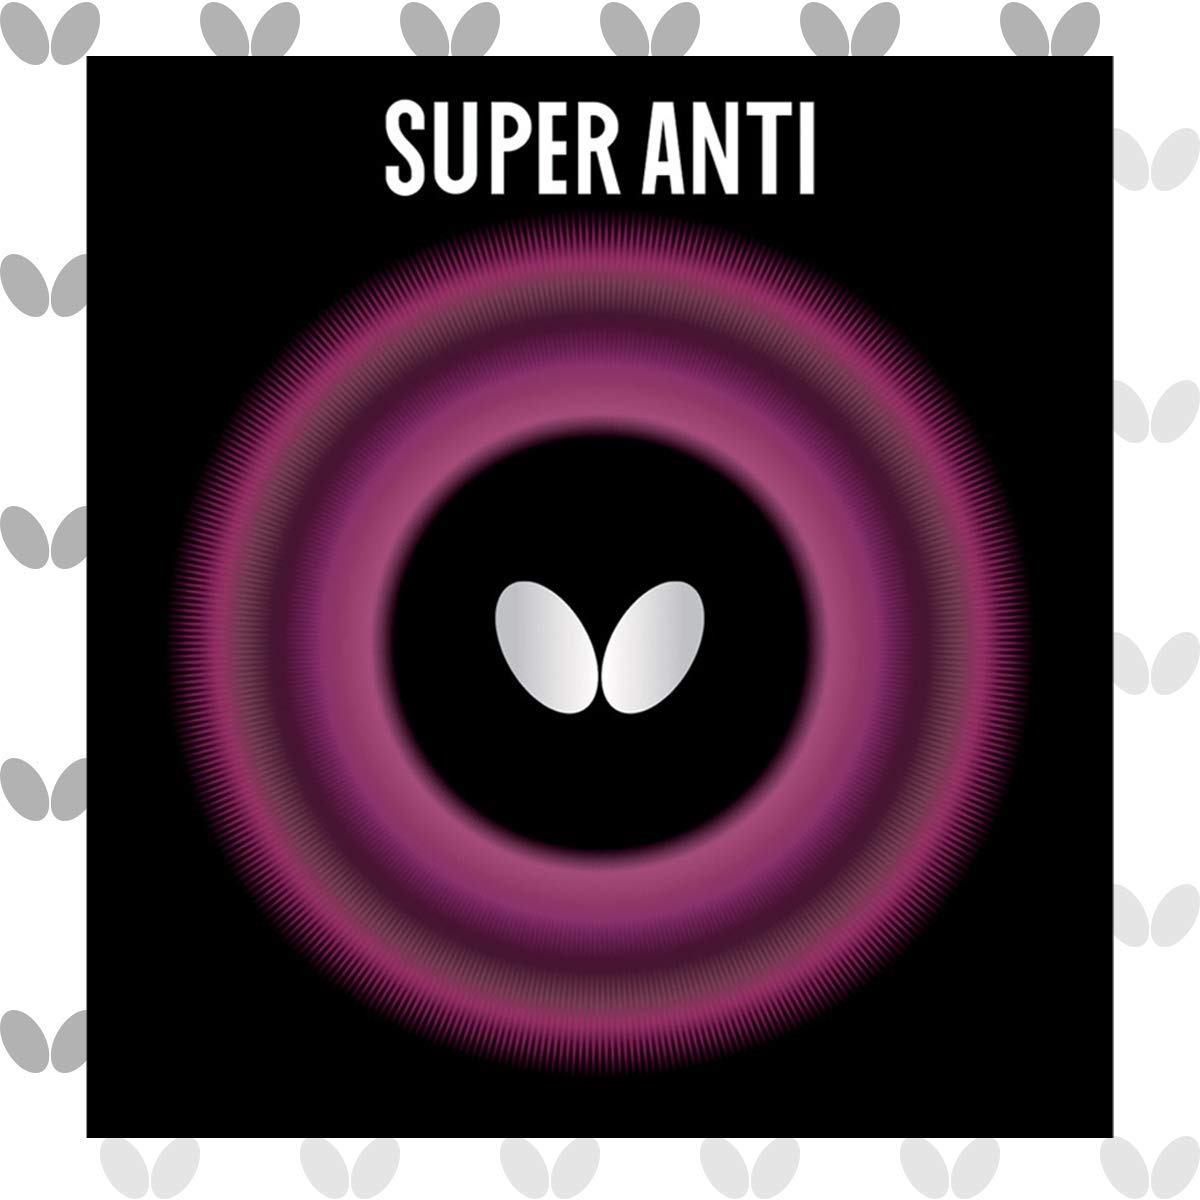 Butterfly Super Anti Table Tennis Rubber (Black) - Best Price online Prokicksports.com